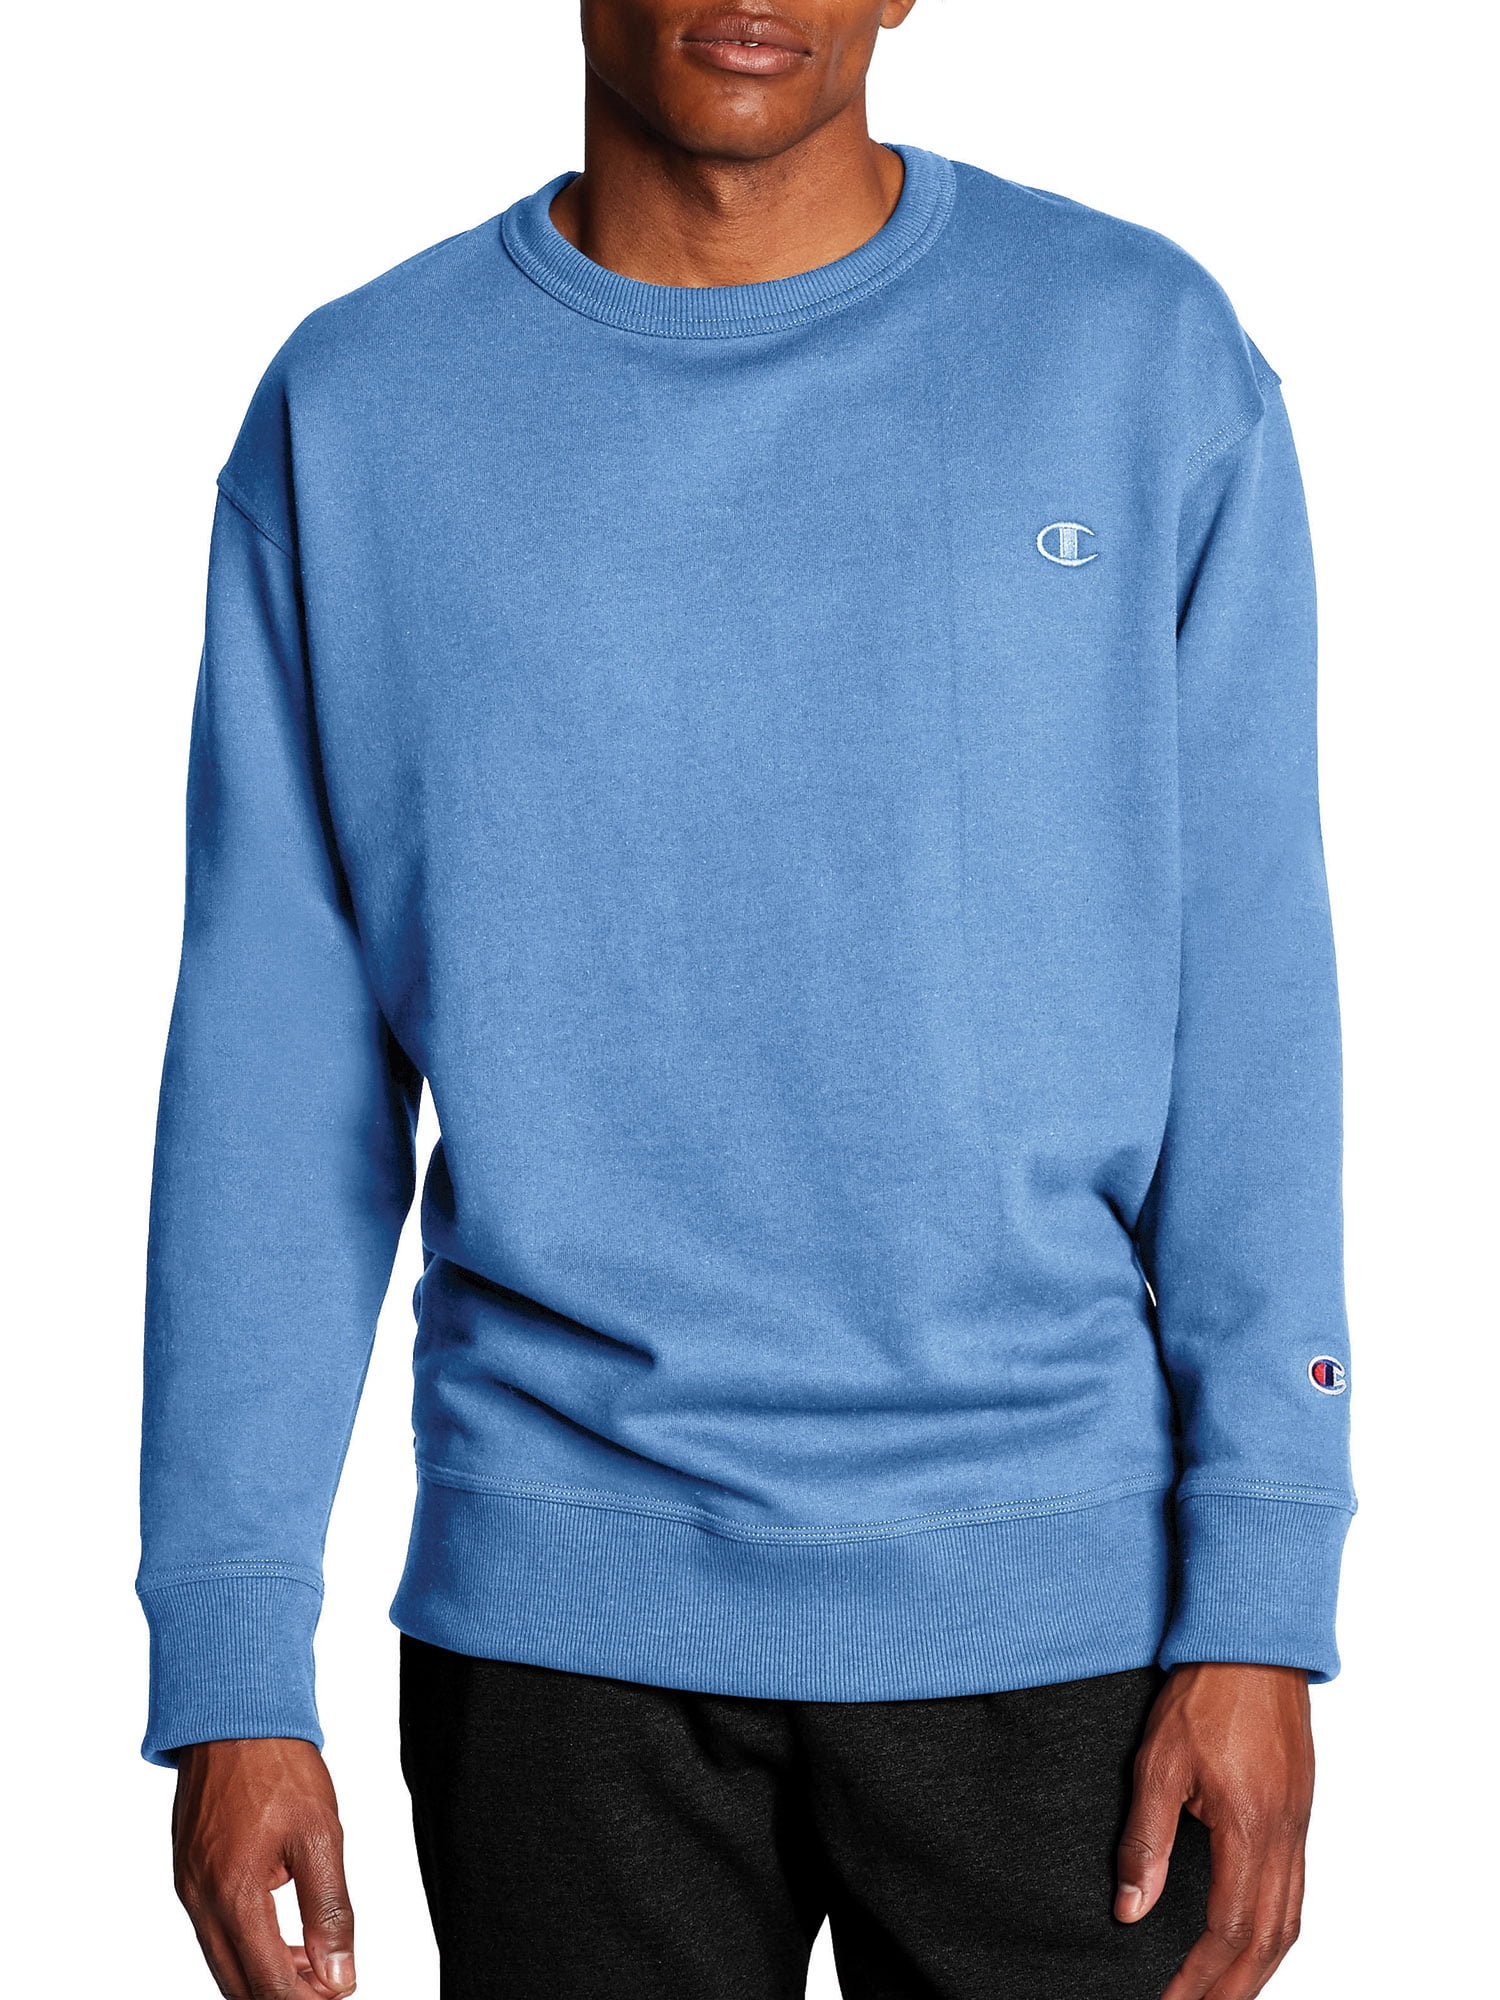 Make Today a Good Day Sapphire Blue Crewneck Sweatshirt Unisex Motivational Quote Crewneck Sweater Blue Sweatshirt